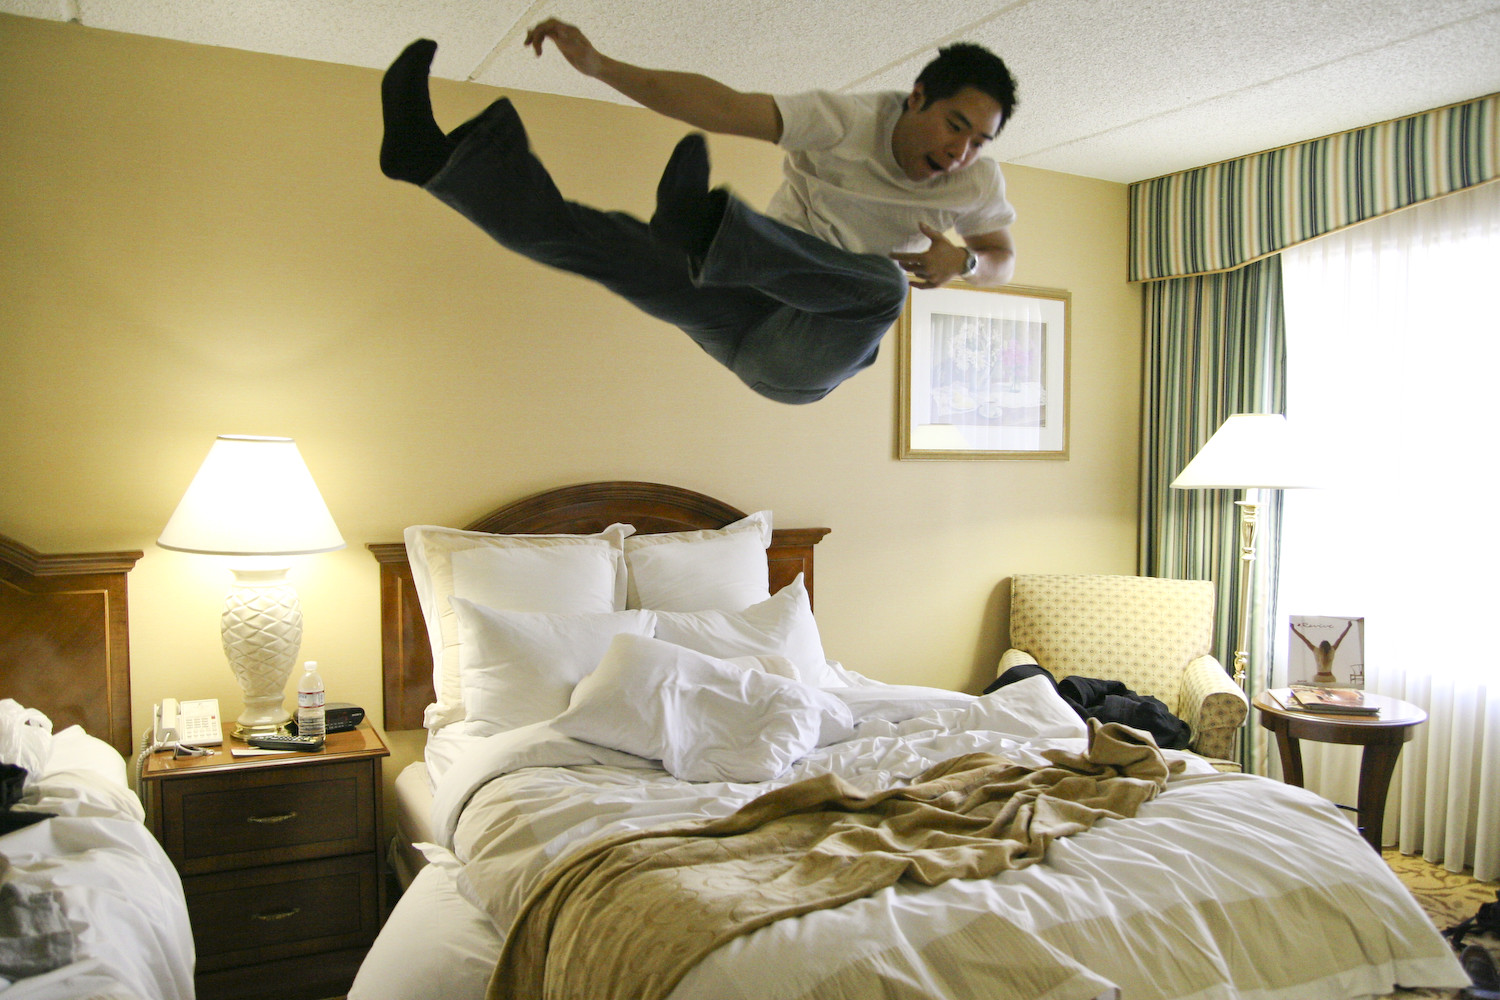 Прыгать на кровати. Человек прыгает на кровати. Прыгать на кровати в отеле. Подпрыгнуть на кровати. Bed falling